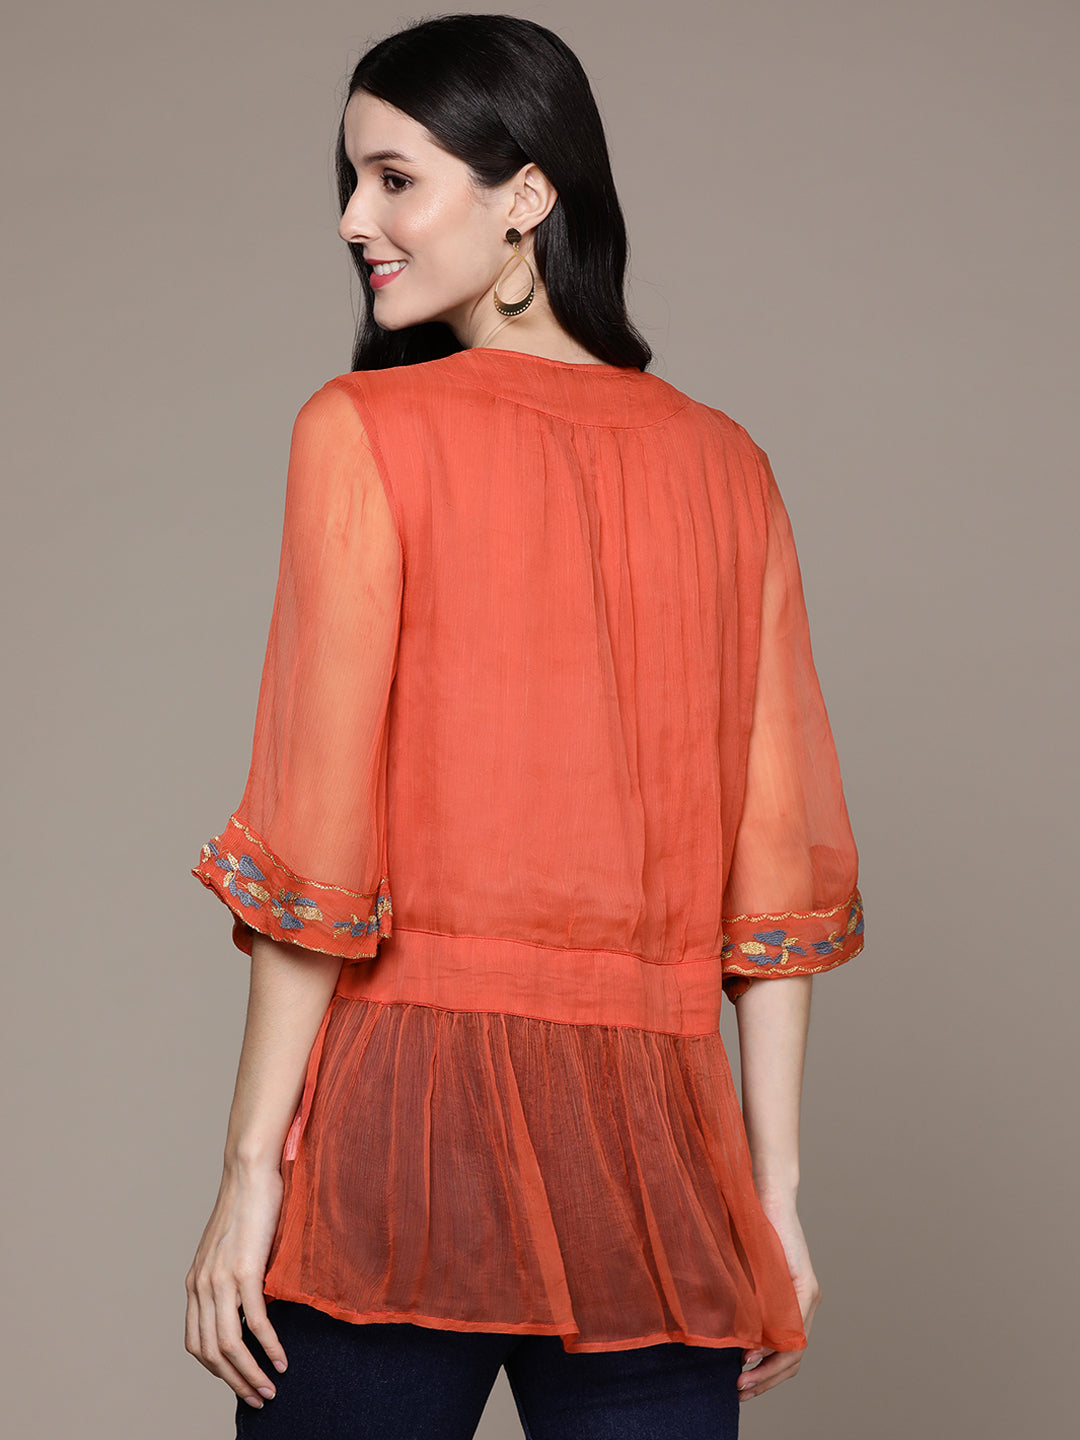 Ishin Women's Orange Embellished Regular Top